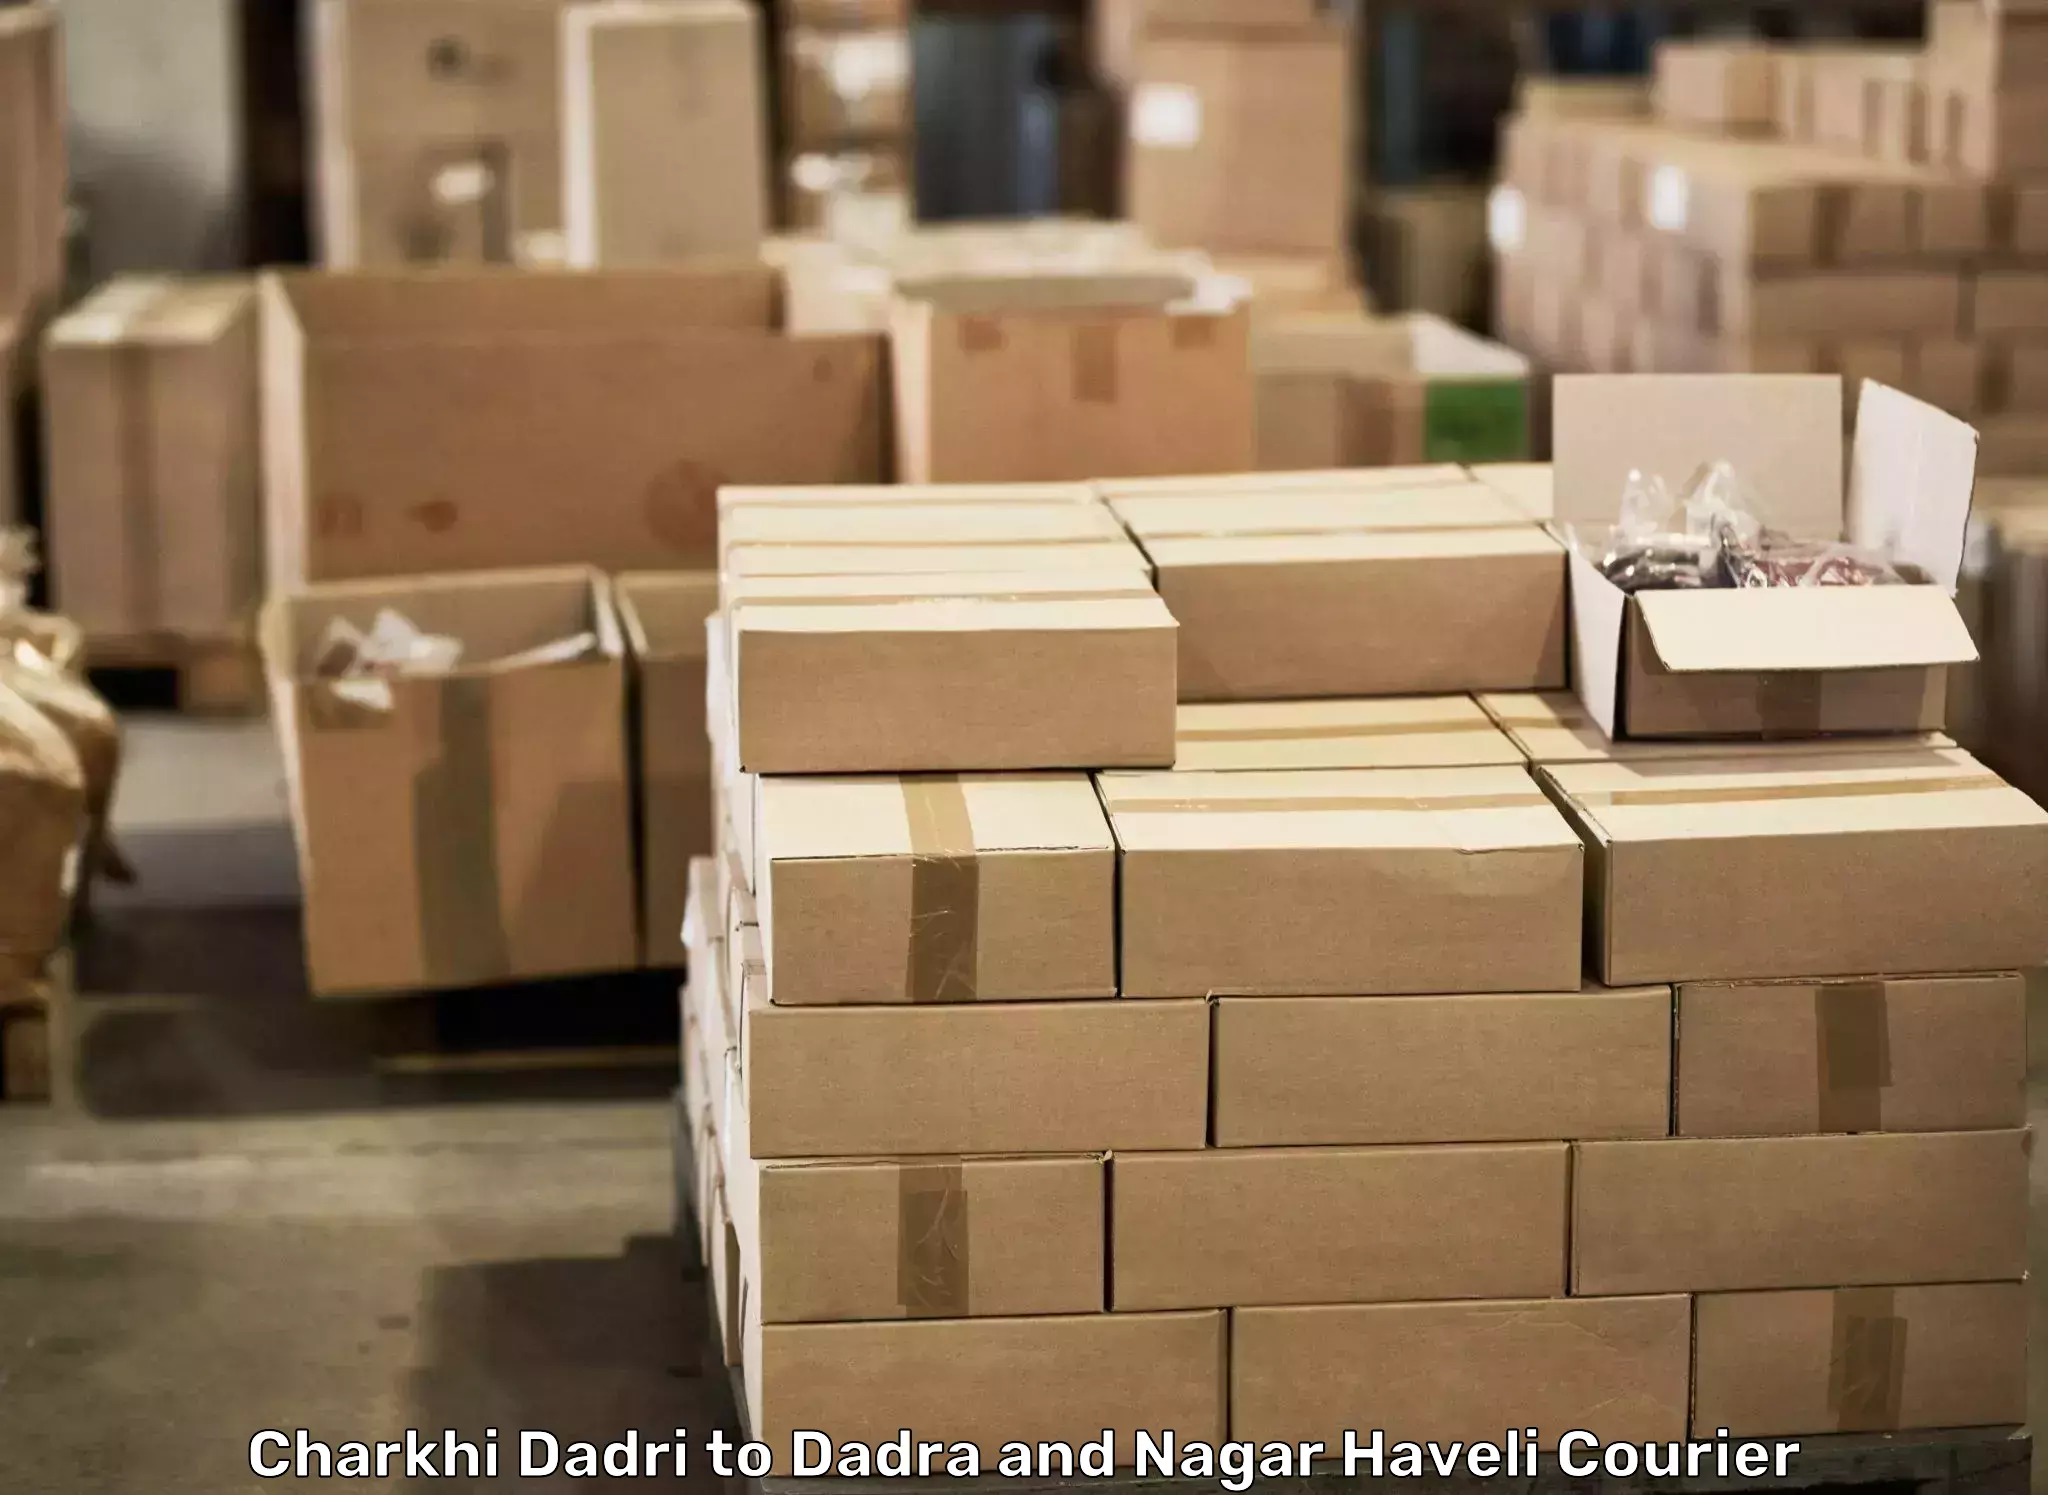 Moving and packing experts Charkhi Dadri to Silvassa